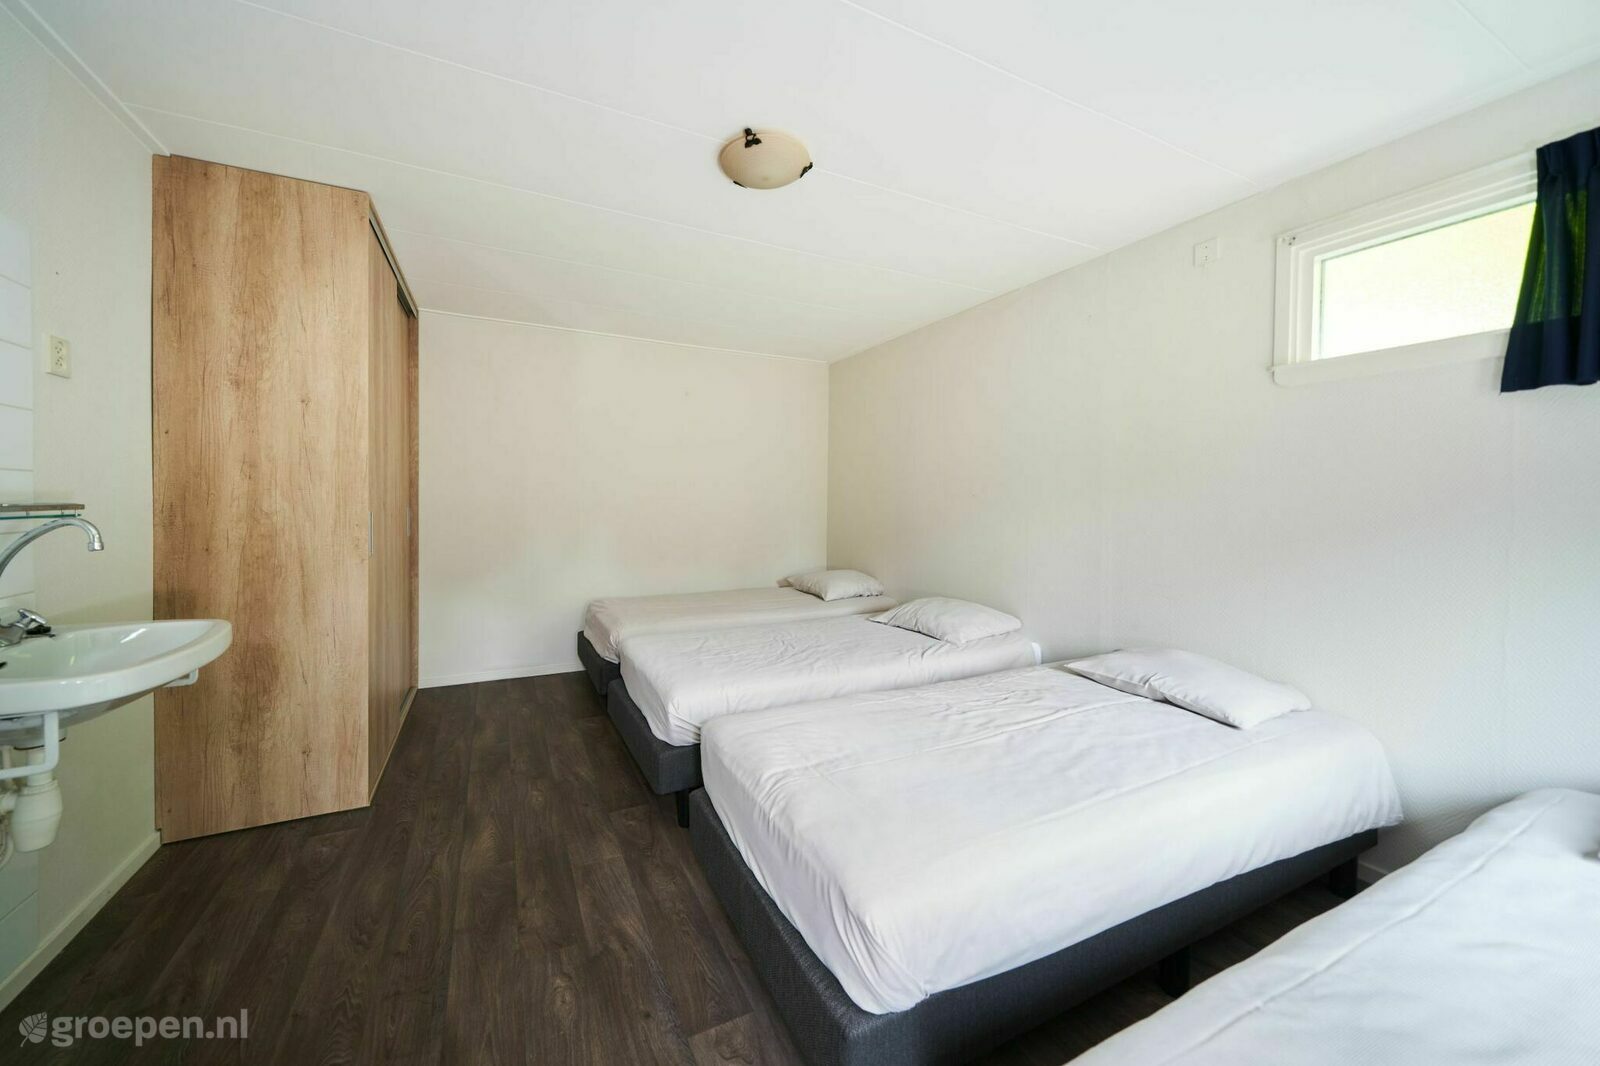 Group accommodation Beekbergen